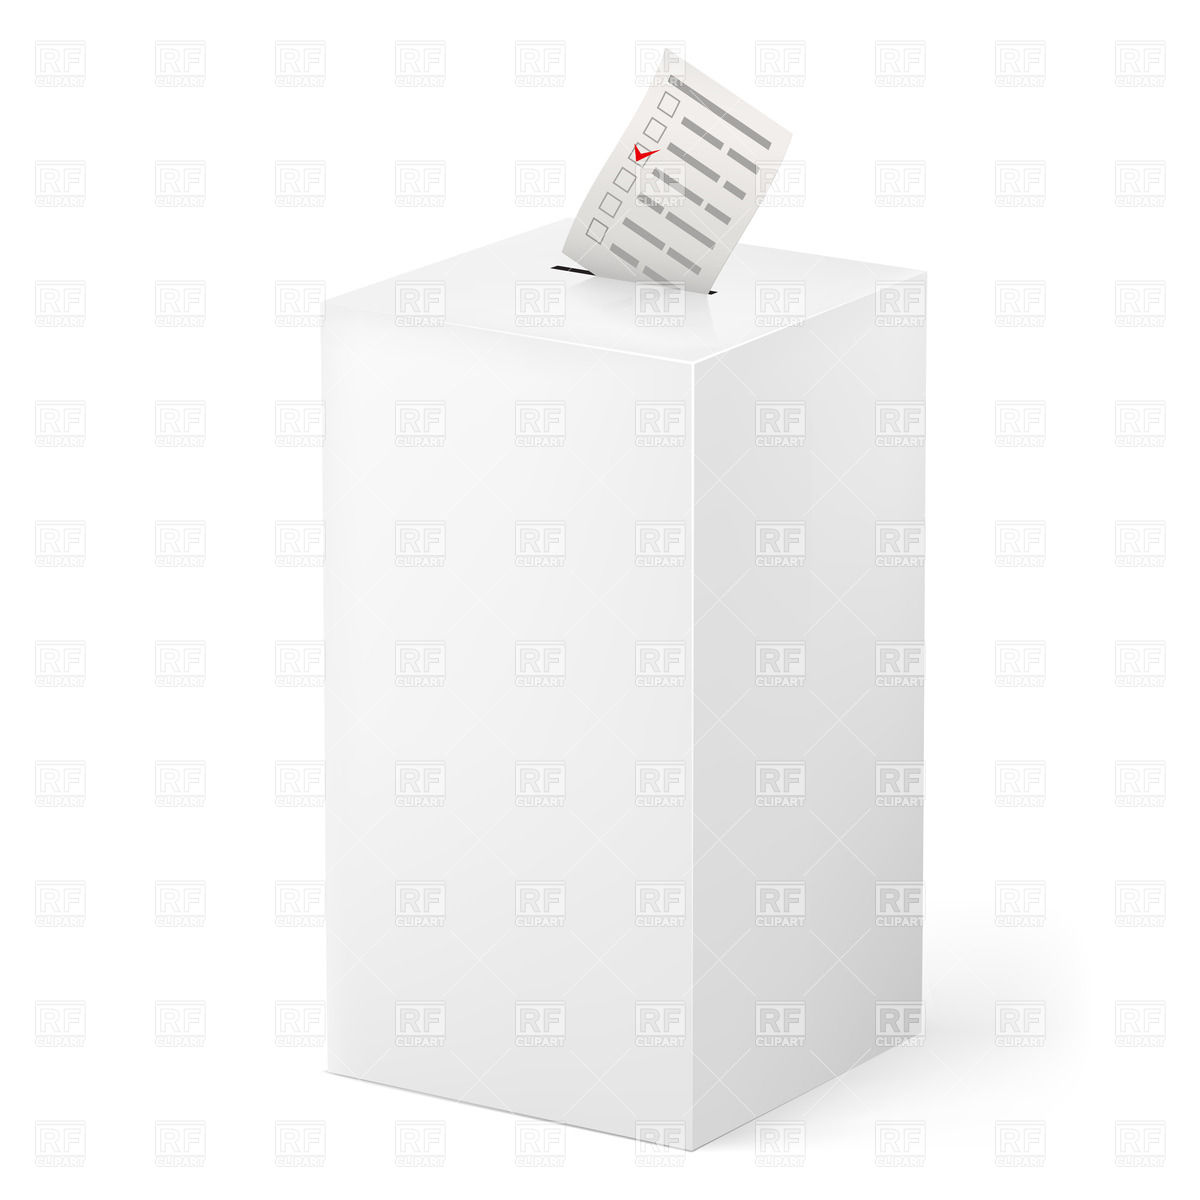 Ballot Box With Ballot Paper   Voting Symbols 20485 Download Royalty    